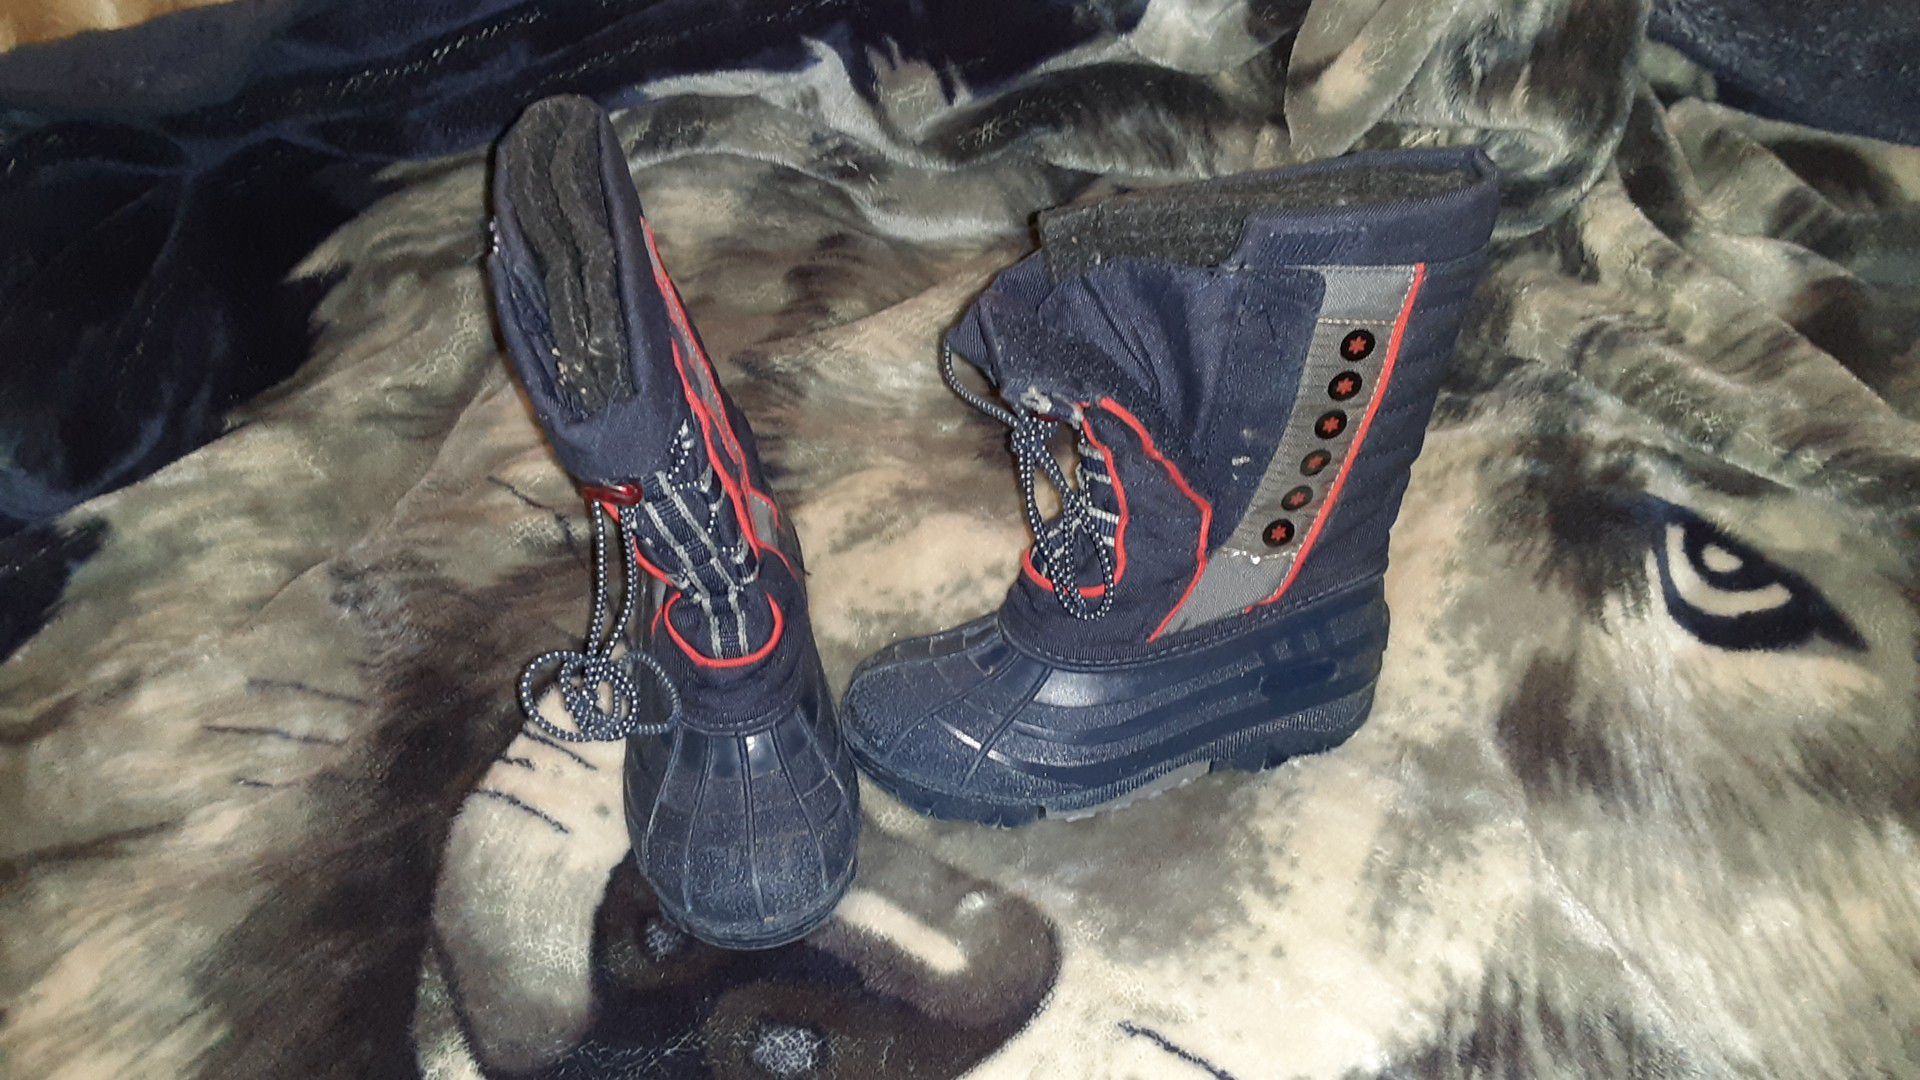 Kids size 13 snow boots